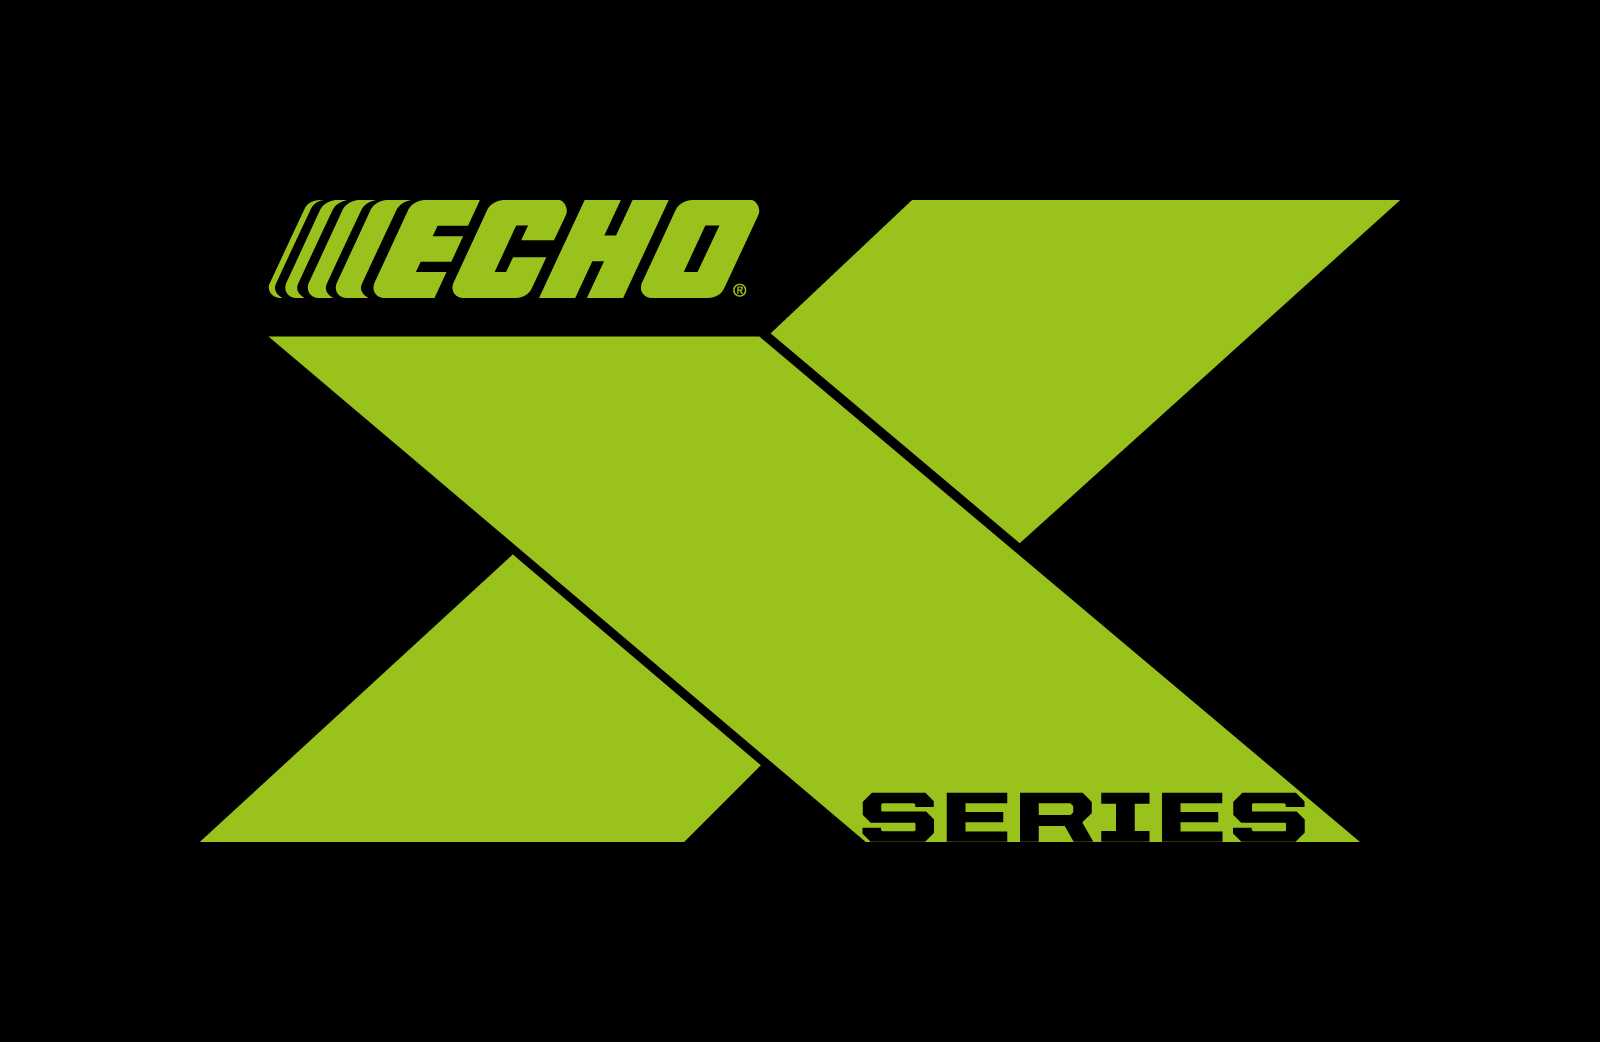 ECHO-XSeries-Green